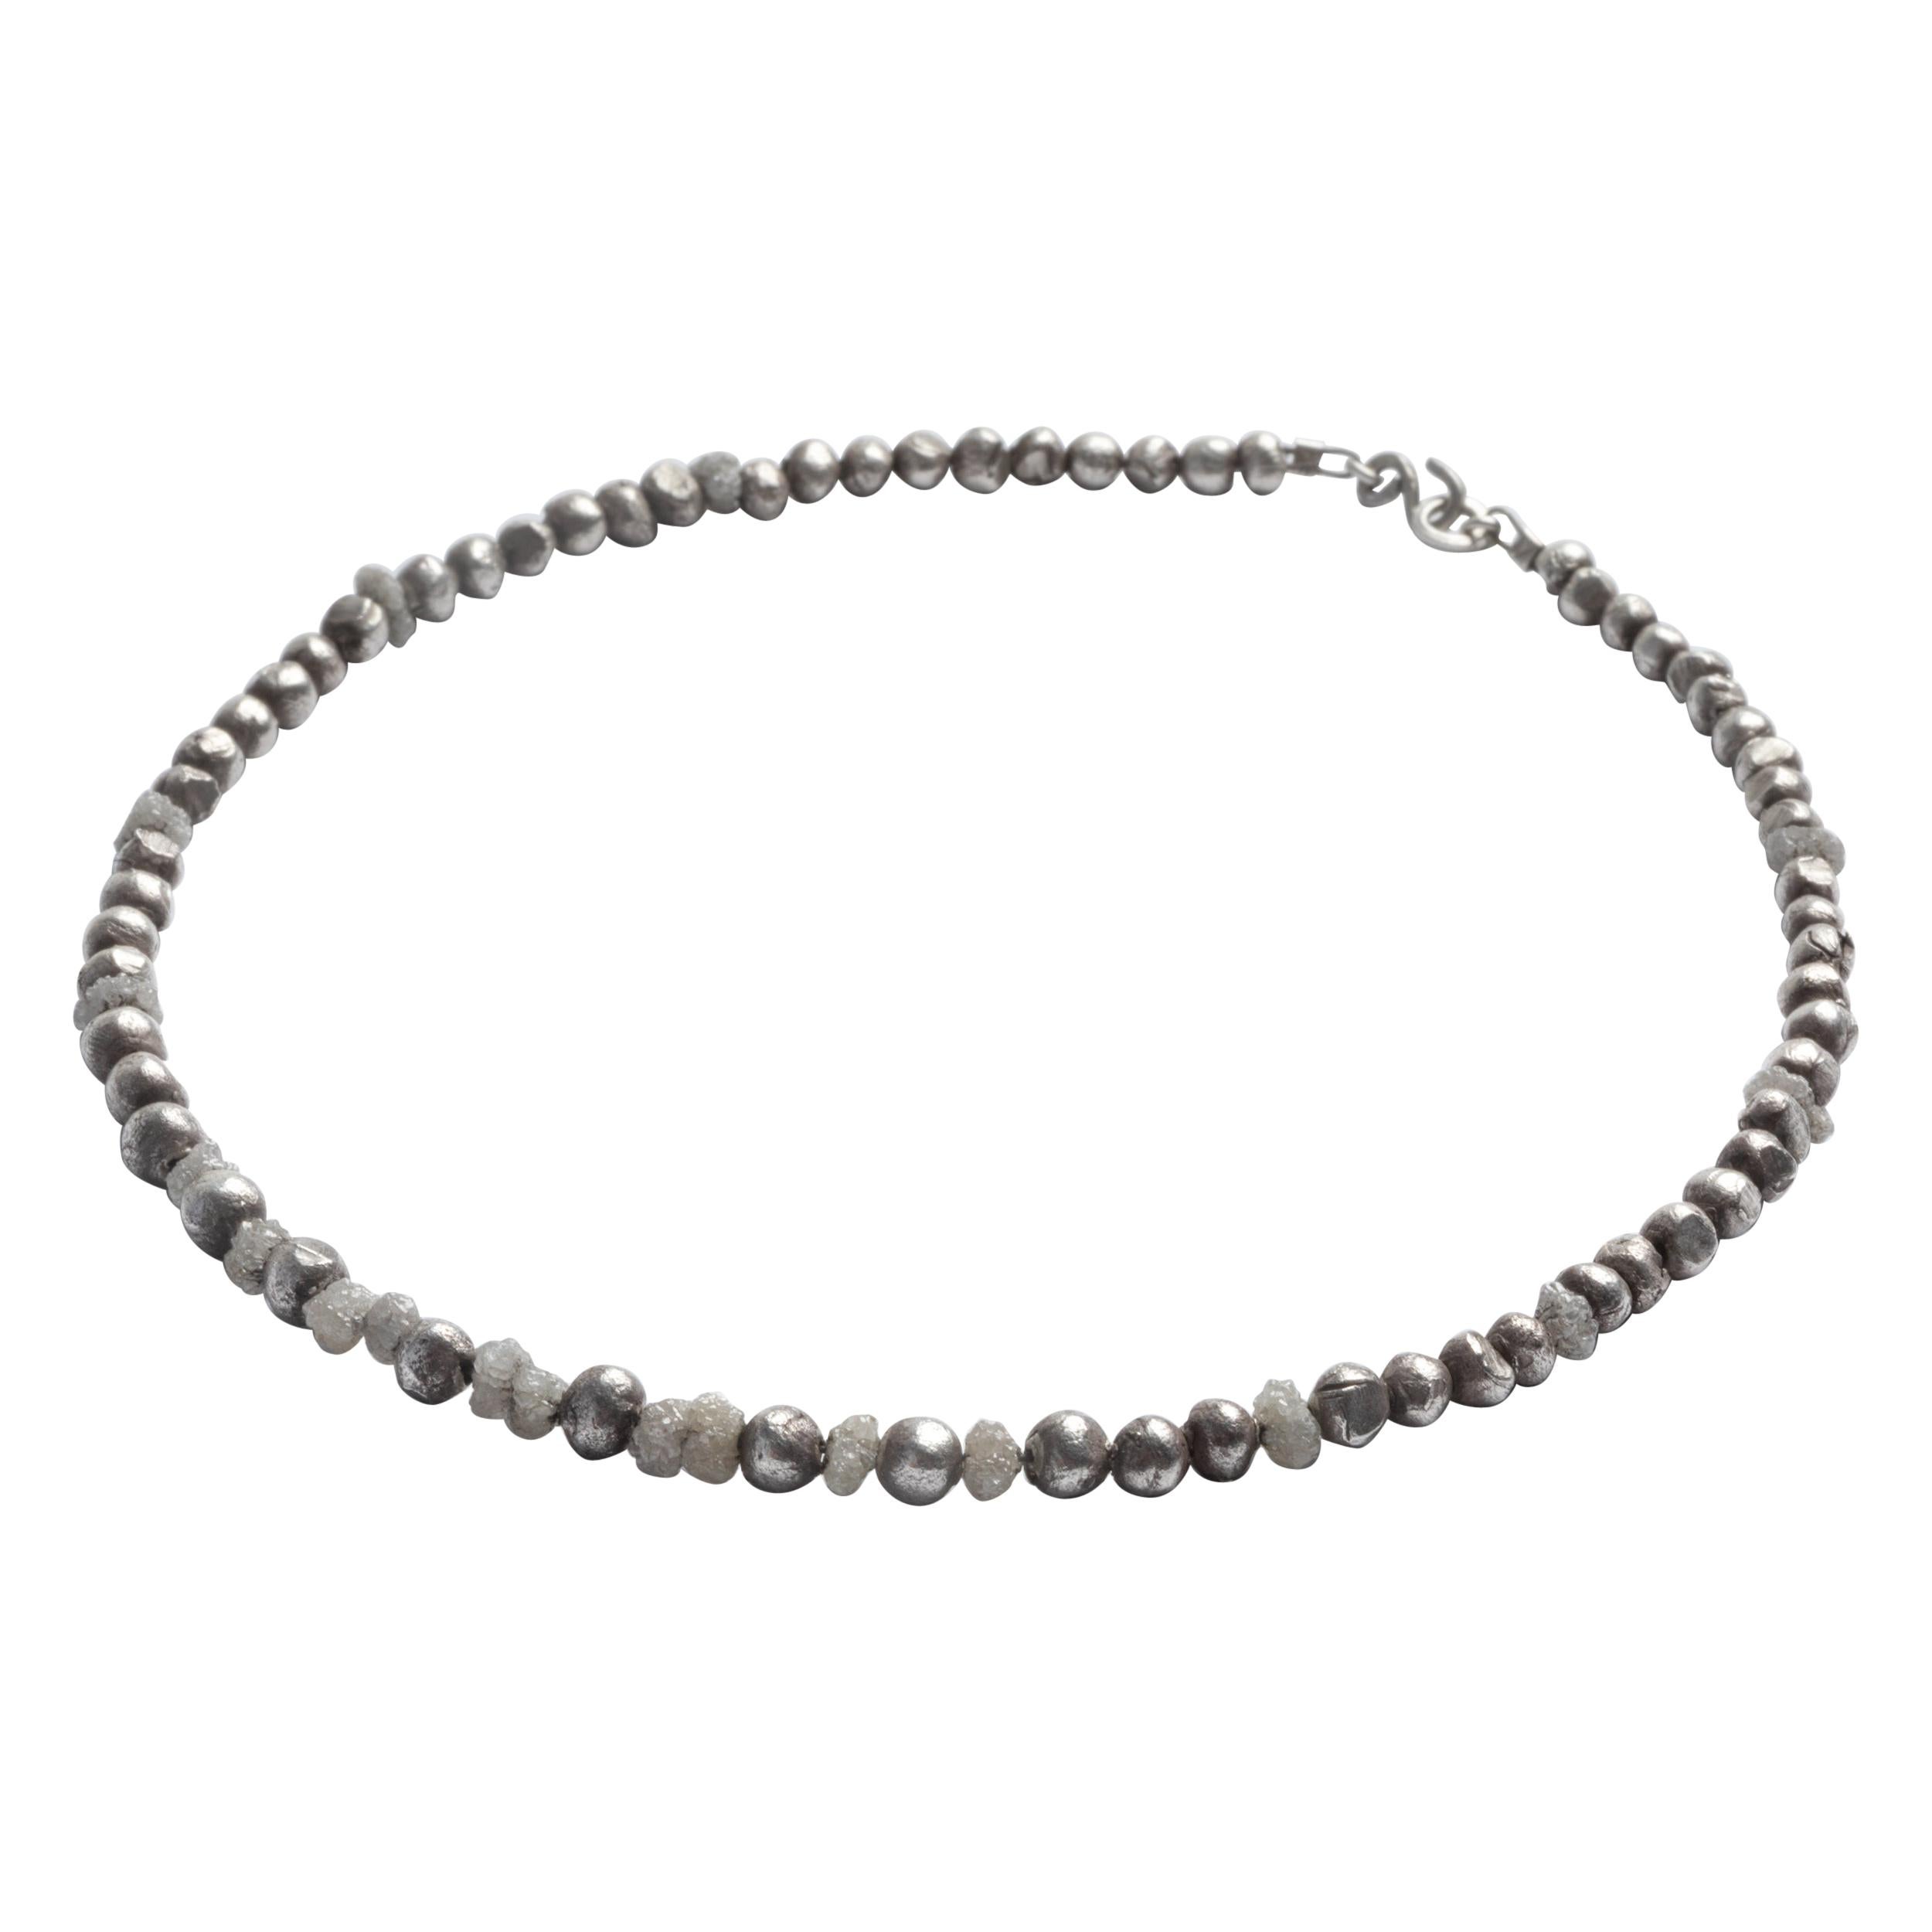 Handmade Sterling Silver Bead and Diamond Choker / Bracelet by Embirikos For Sale